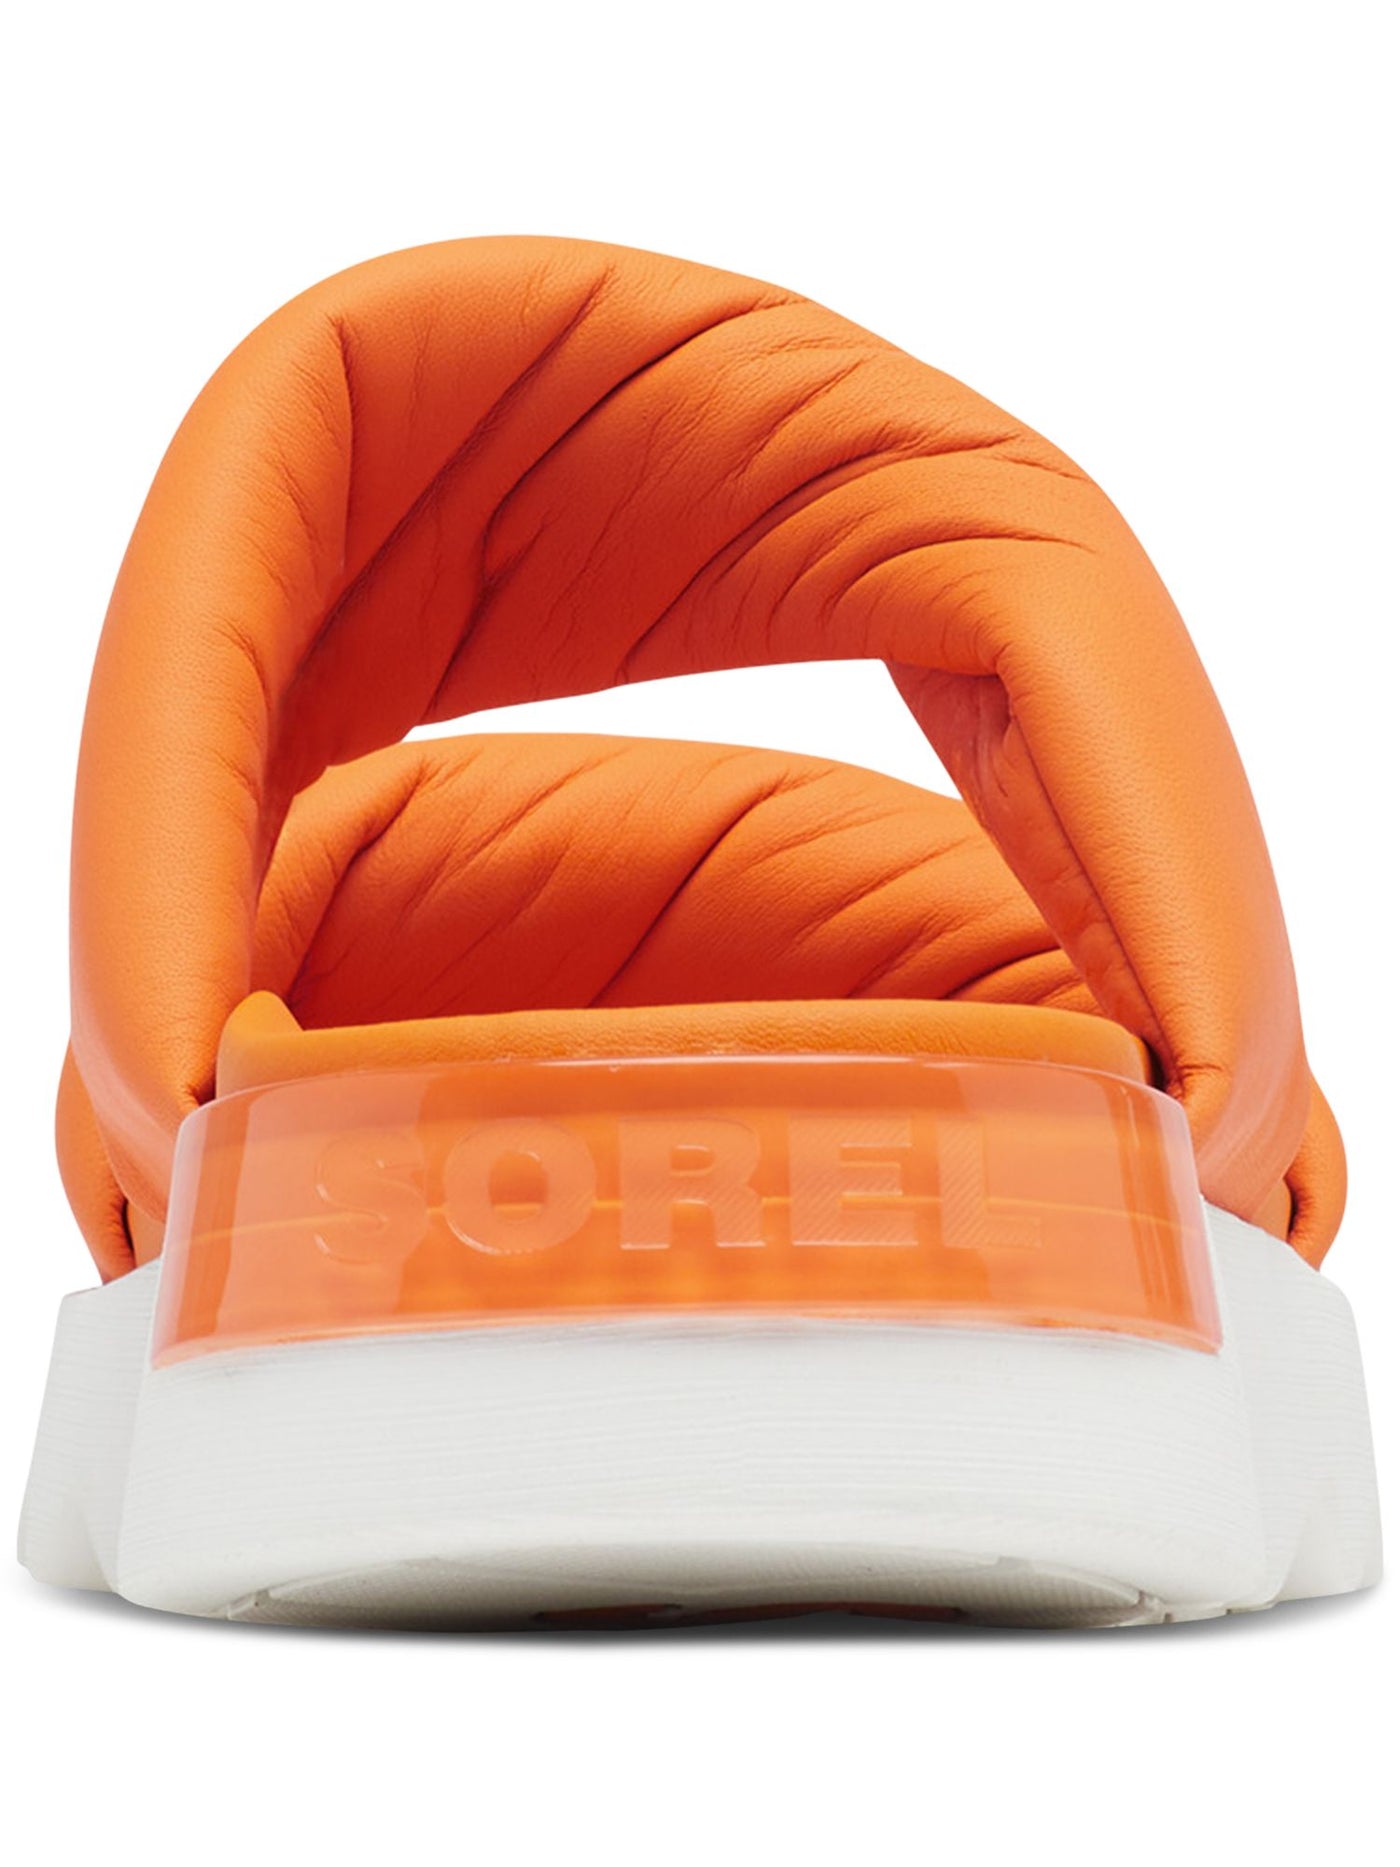 SOREL Womens Orange Twisted Comfort Padded Vibe Round Toe Platform Slip On Leather Slide Sandals Shoes 5.5